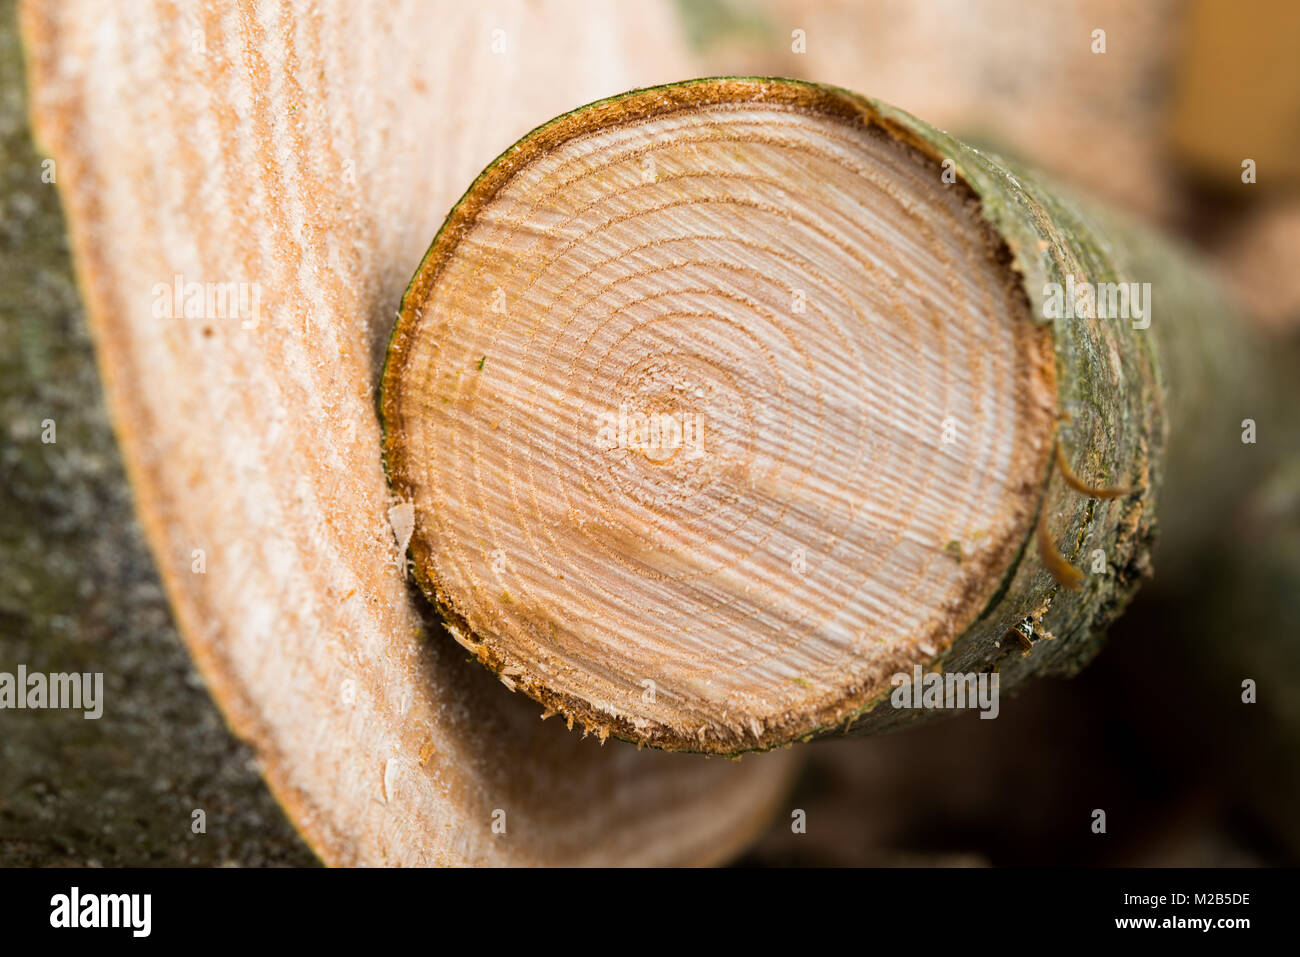 Wood cutting  using chainsaw. Stock Photo